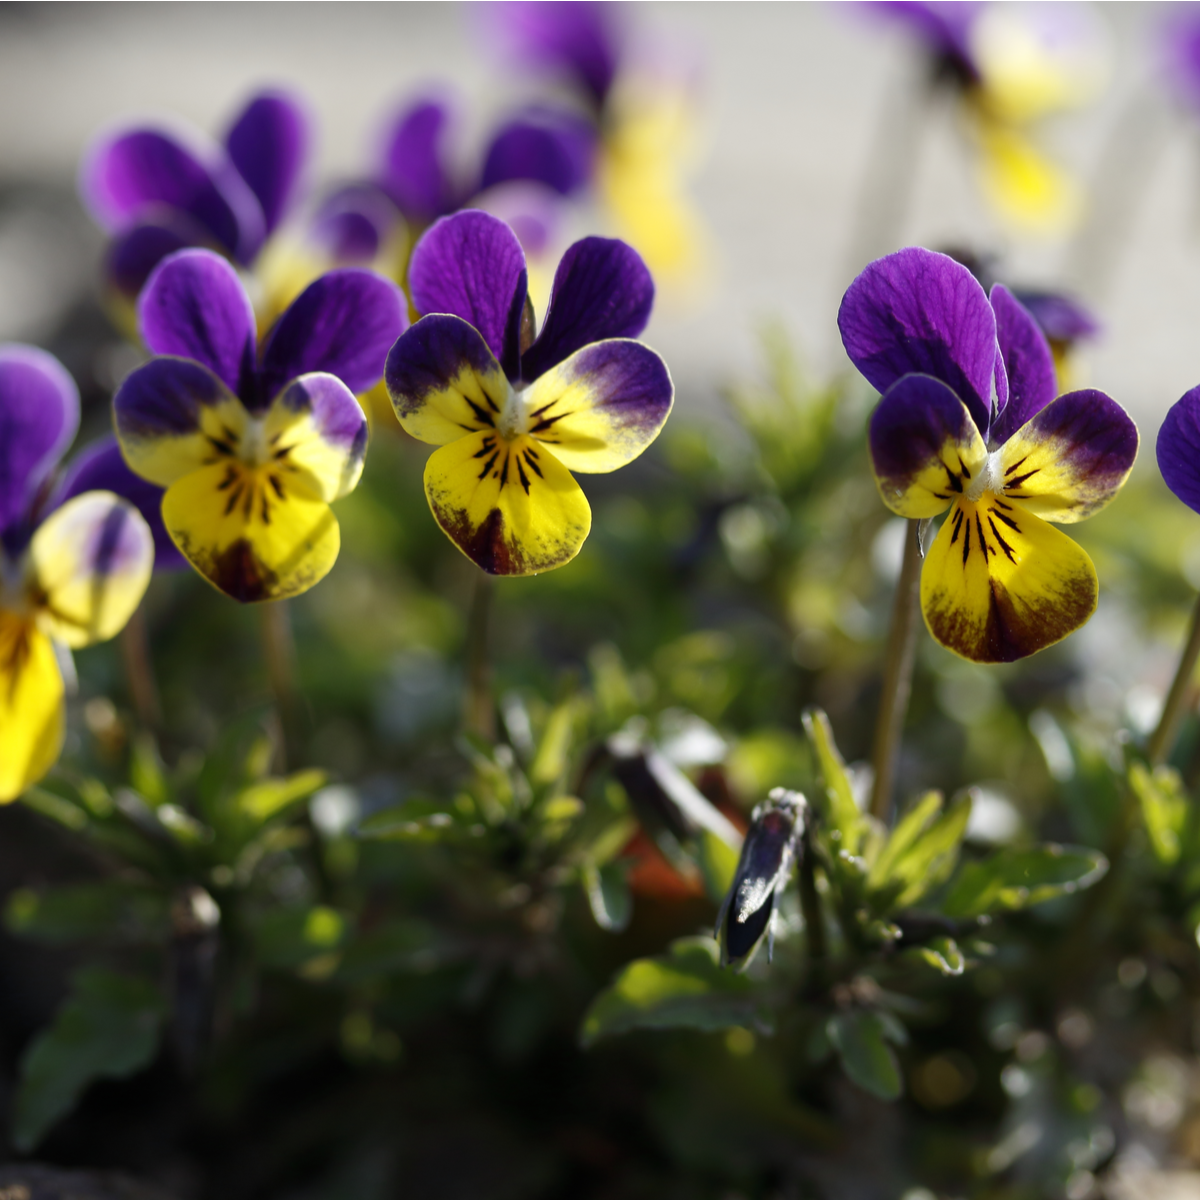 Violka rohatá Johnny Jump - Viola cornuta - semena violky - 300 ks